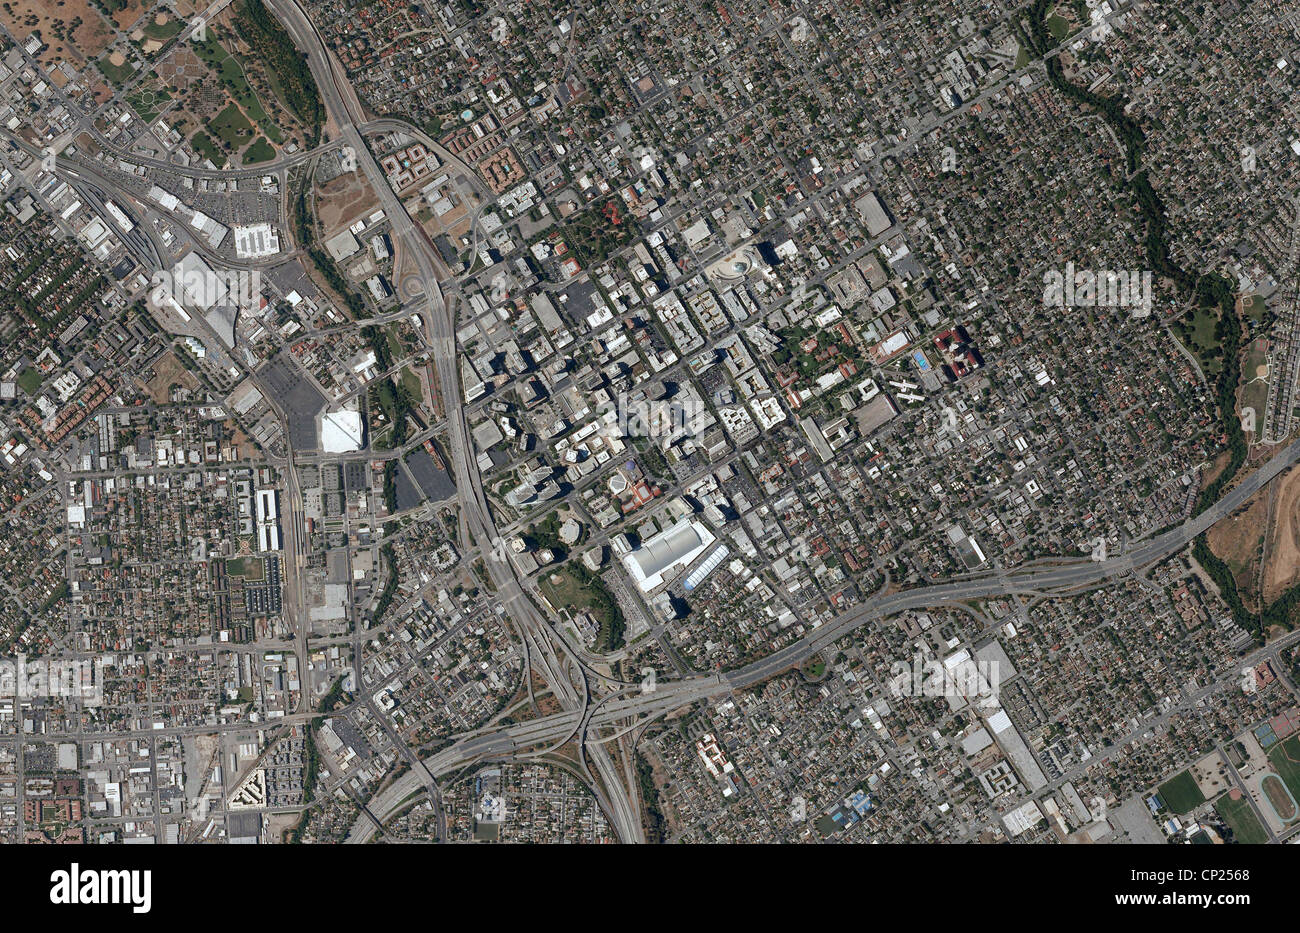 The San Jose California Satellite Poster Map